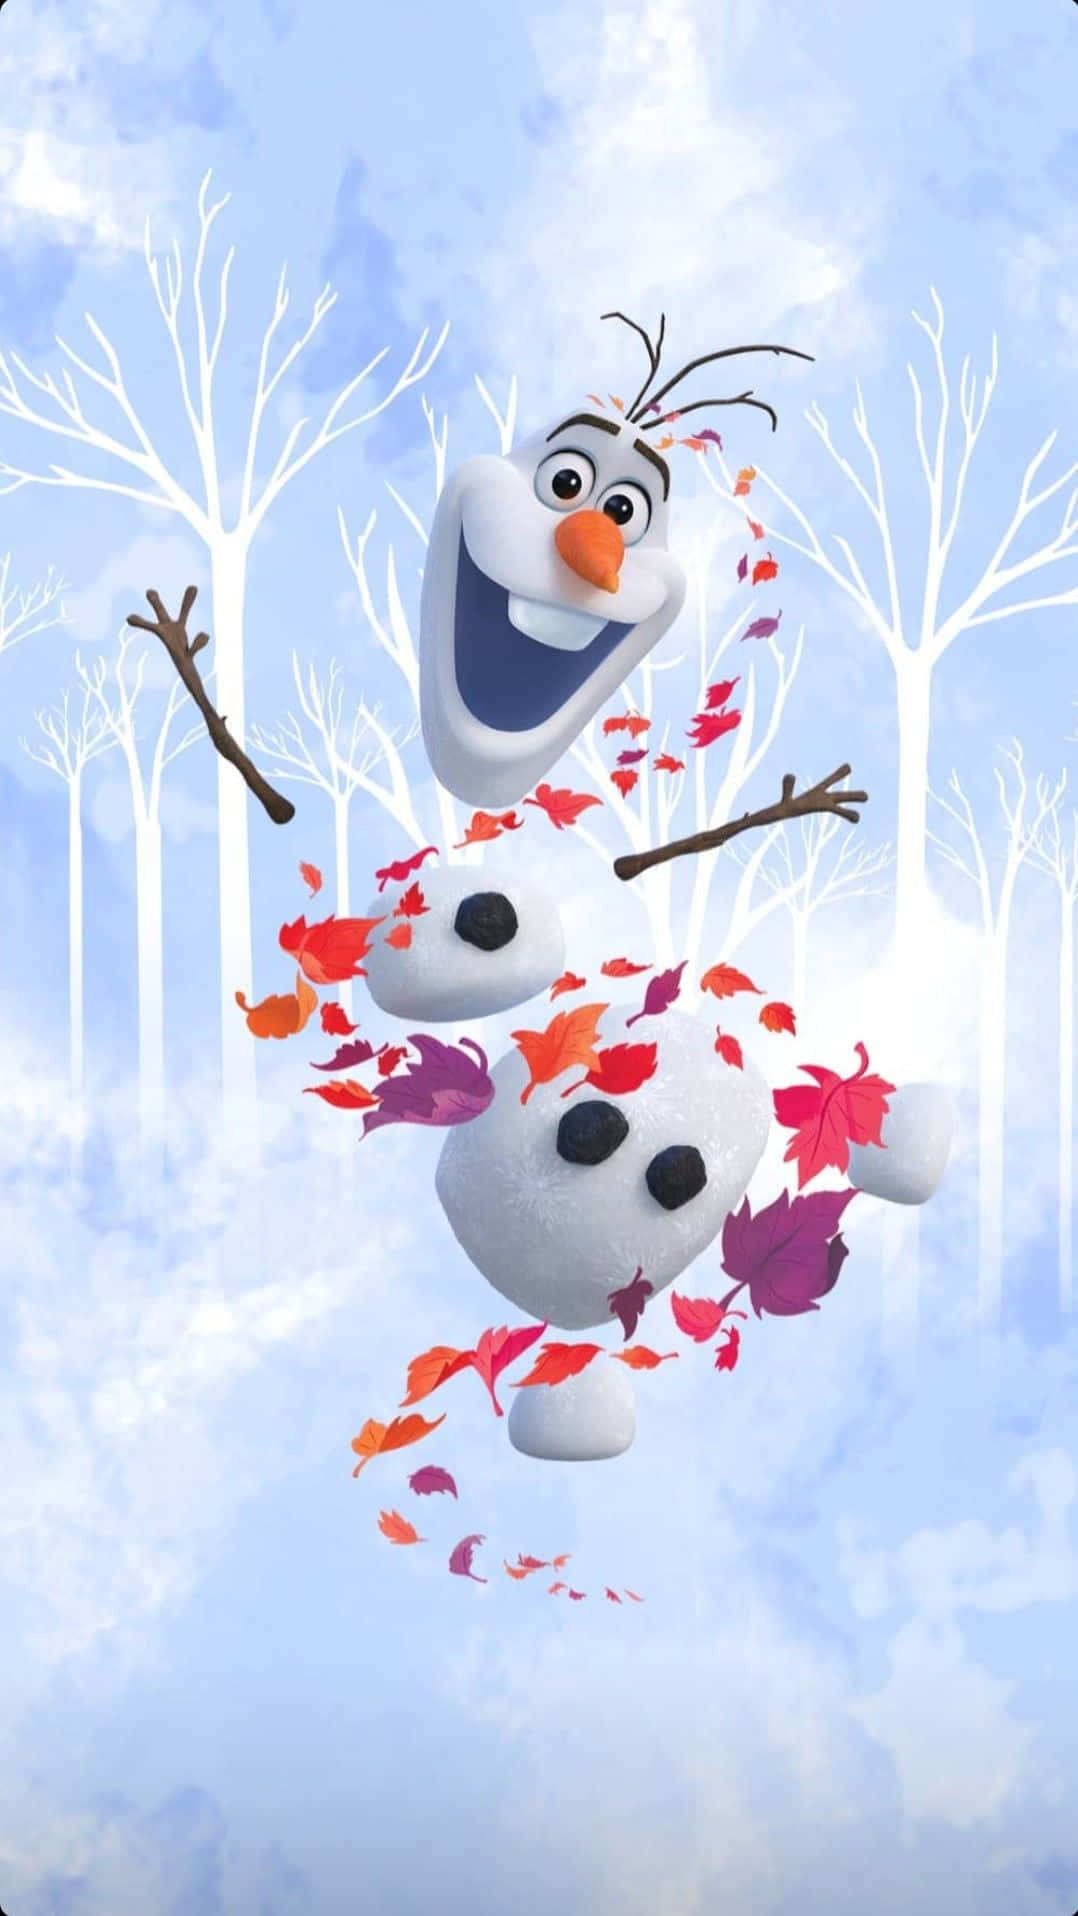 Download Cute Olaf giving the biggest hug! Wallpaper | Wallpapers.com